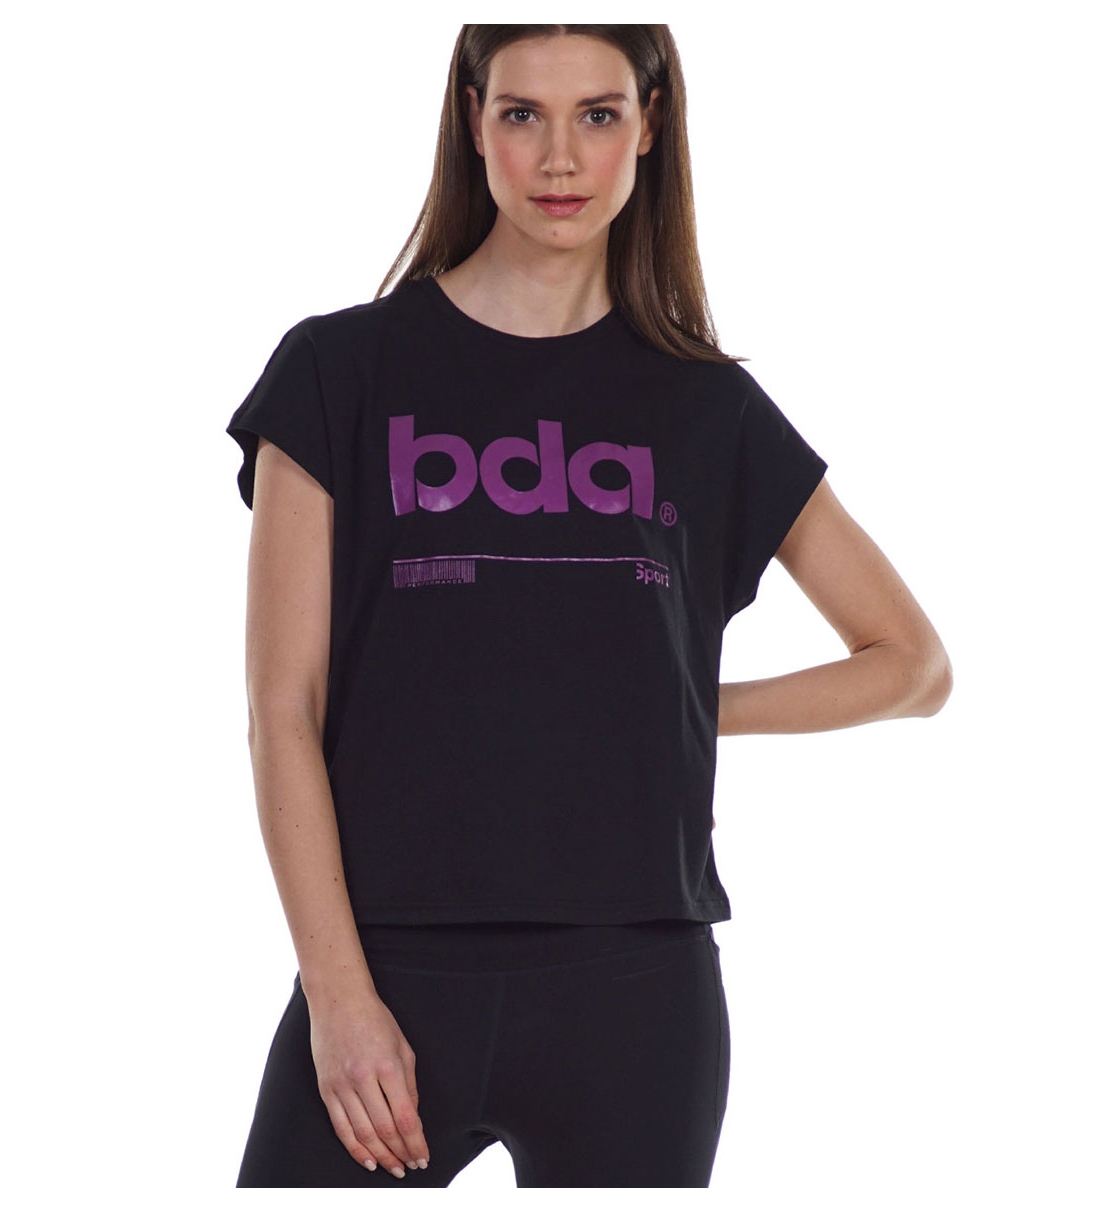 Body Action Γυναικεία Κοντομάνικη Μπλούζα Ss21 Women'S Relaxed Fit T-Shirt 051133